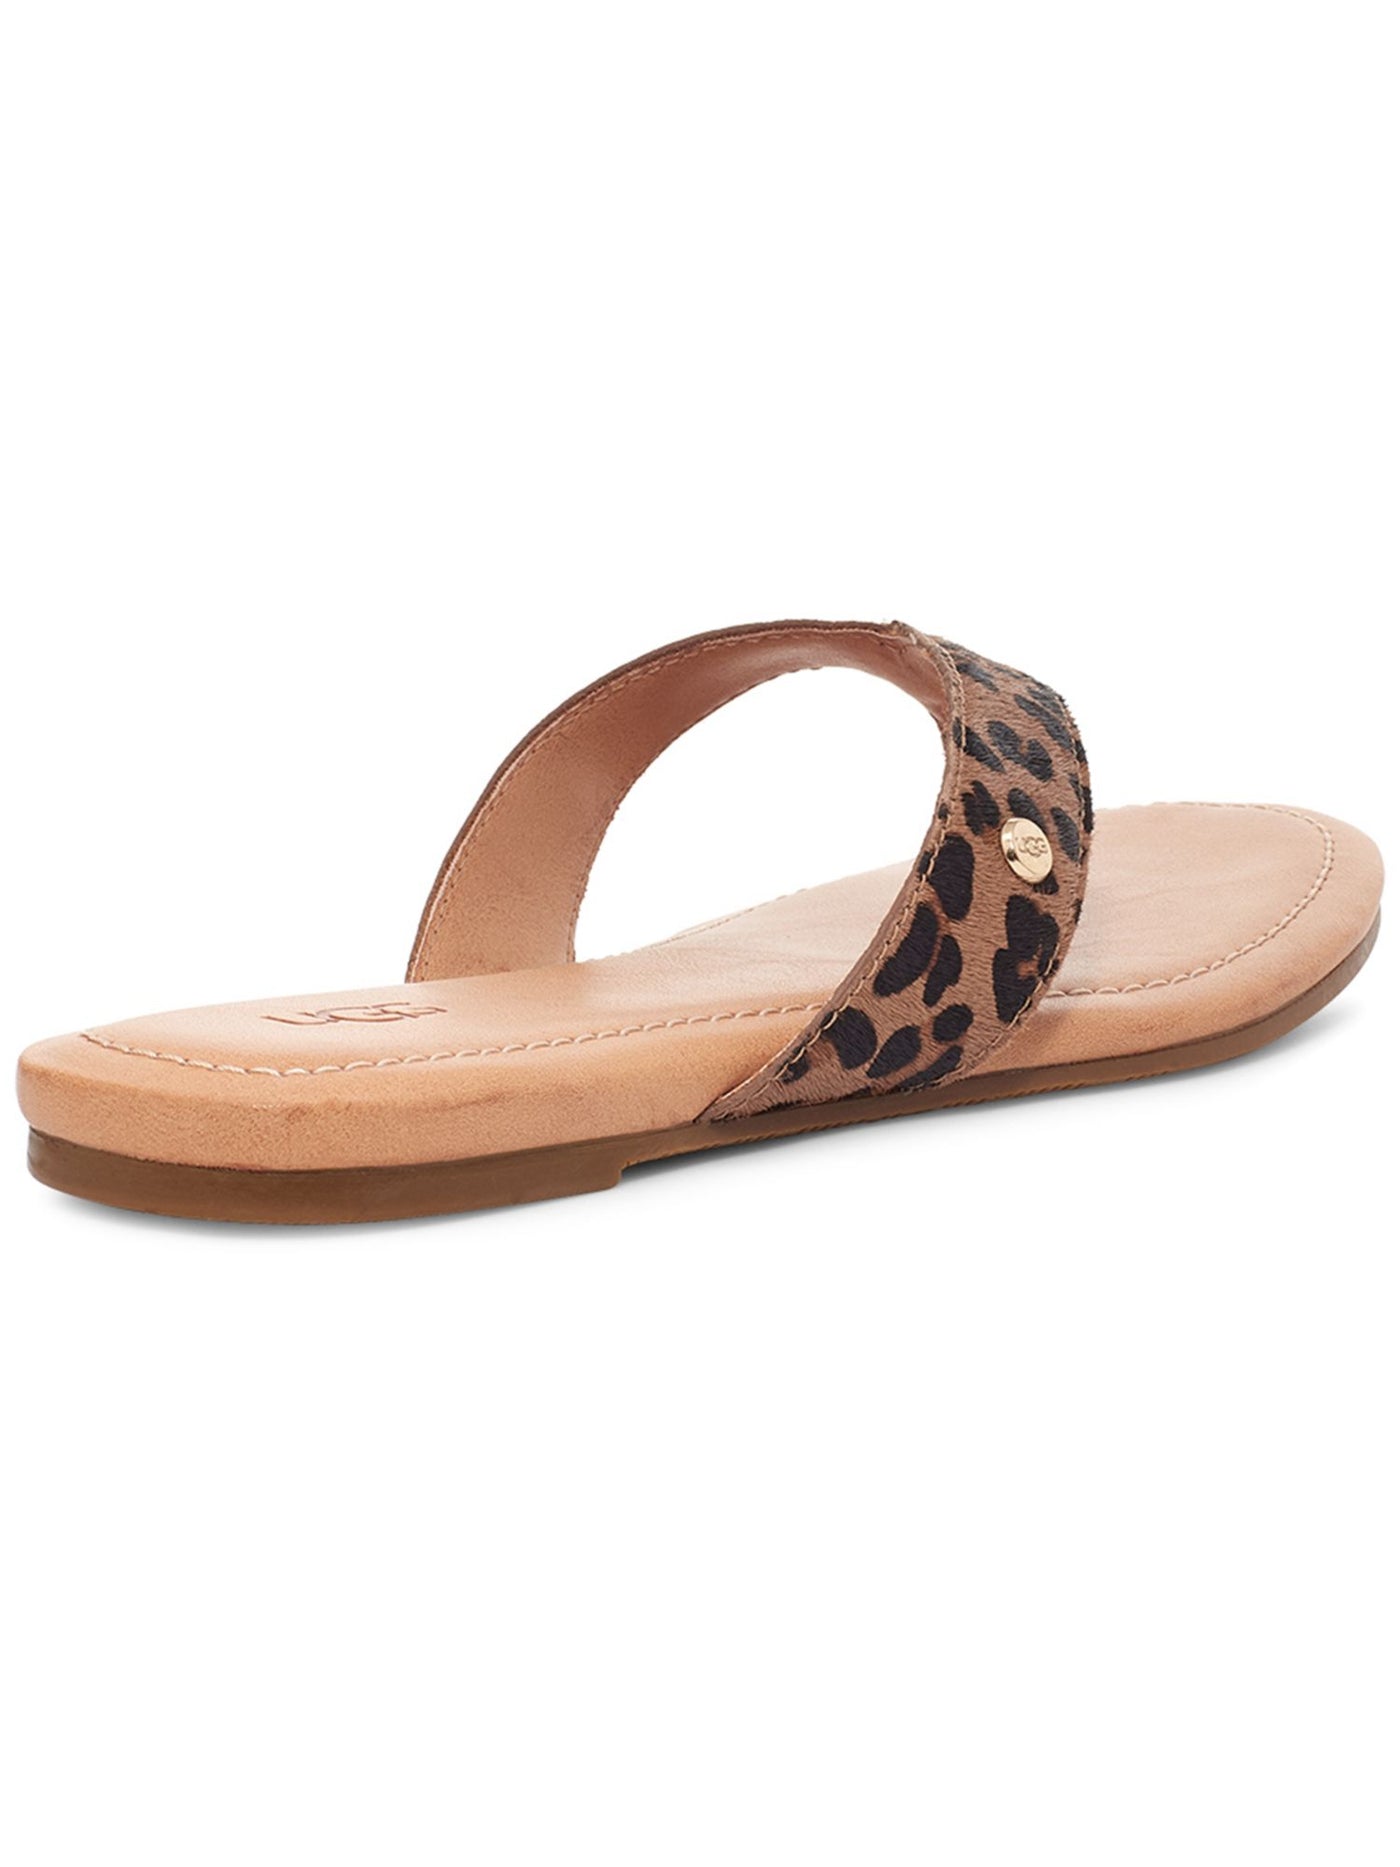 UGG Womens Beige Animal Print Tuolumne Round Toe Slip On Leather Thong Sandals Shoes 11